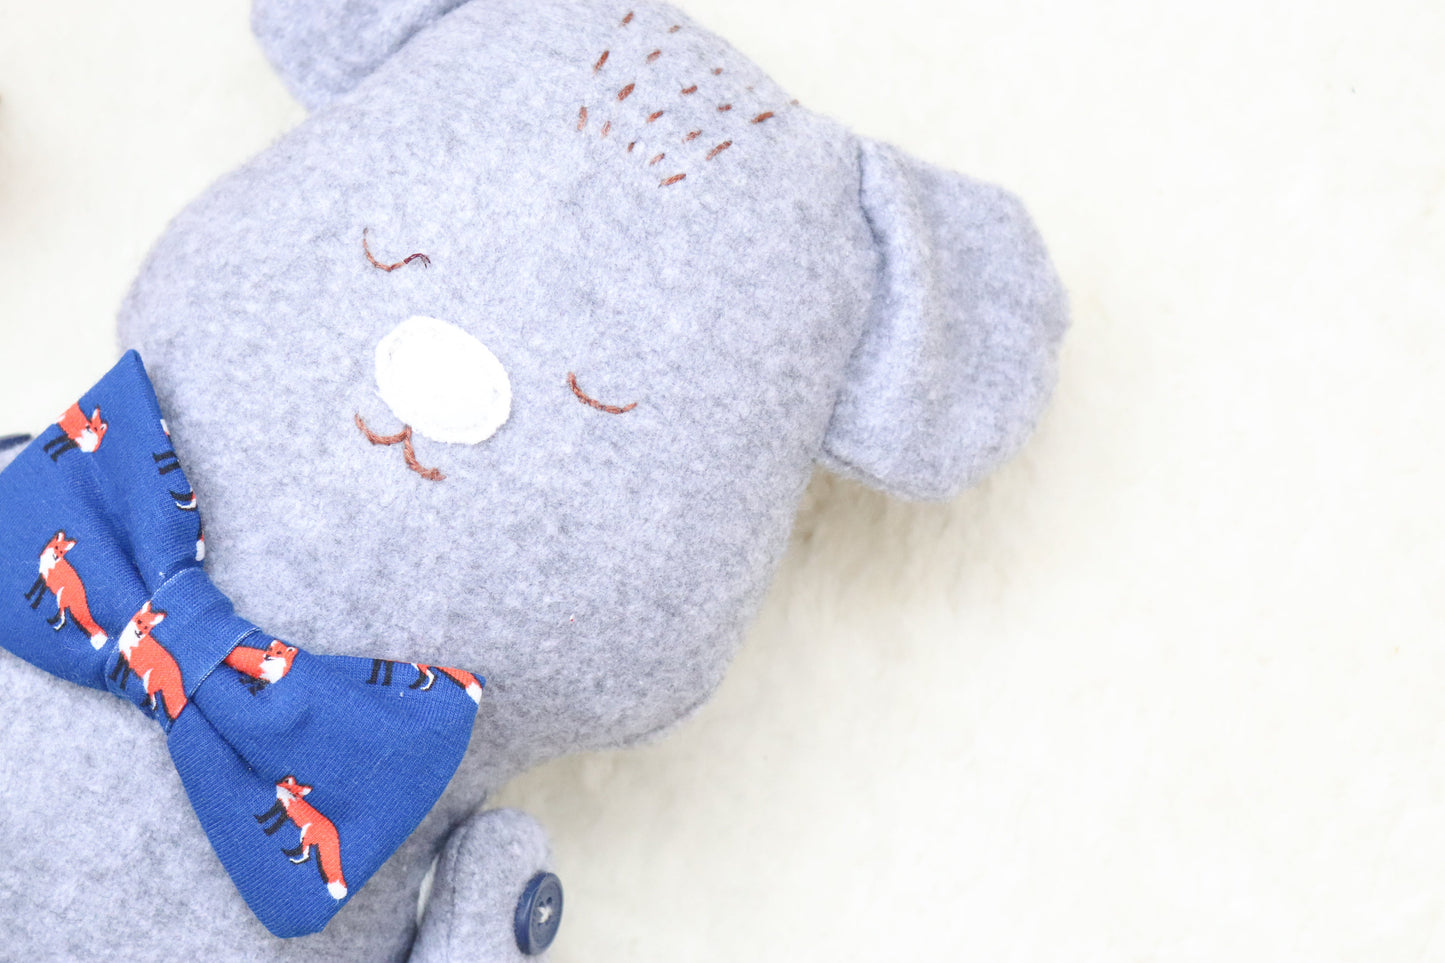 Handmade dolls - Handmade Blue bear - Fabric dolls for kids - Hand embroidered stuffed toy